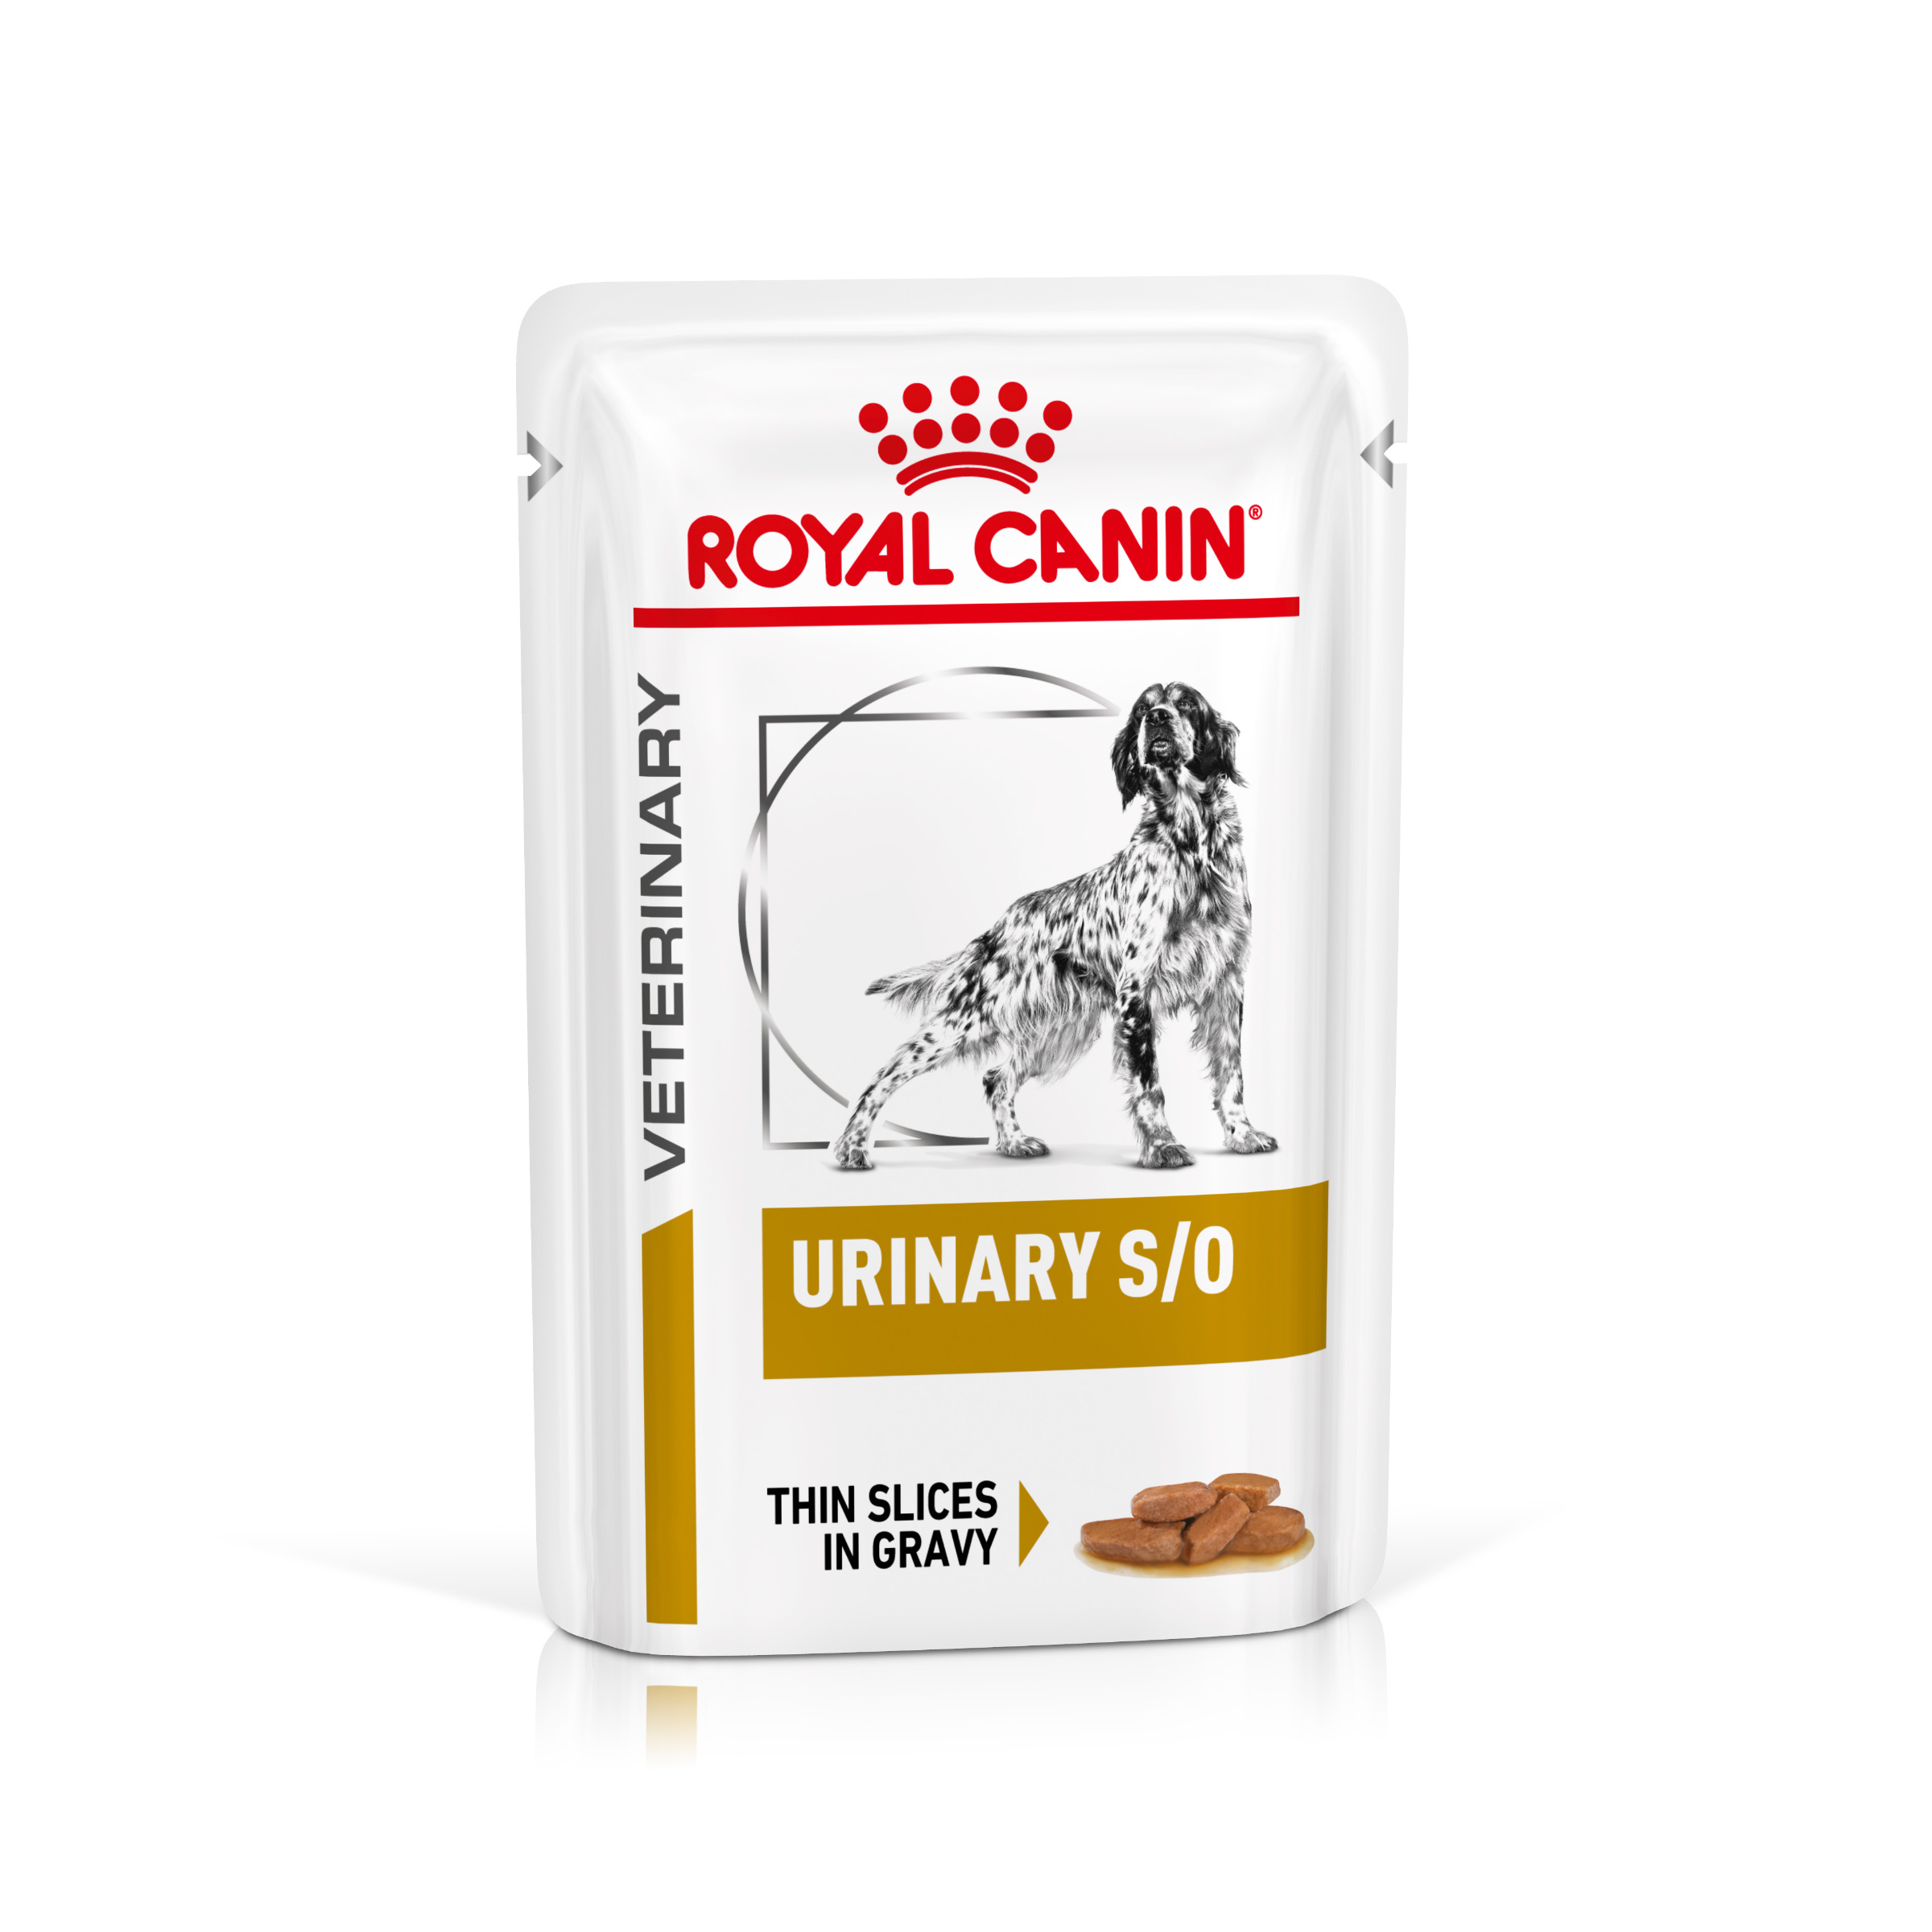 Royal canin veterinary health nutrition dog urinary s/o pouch in gravy kapsa 100g